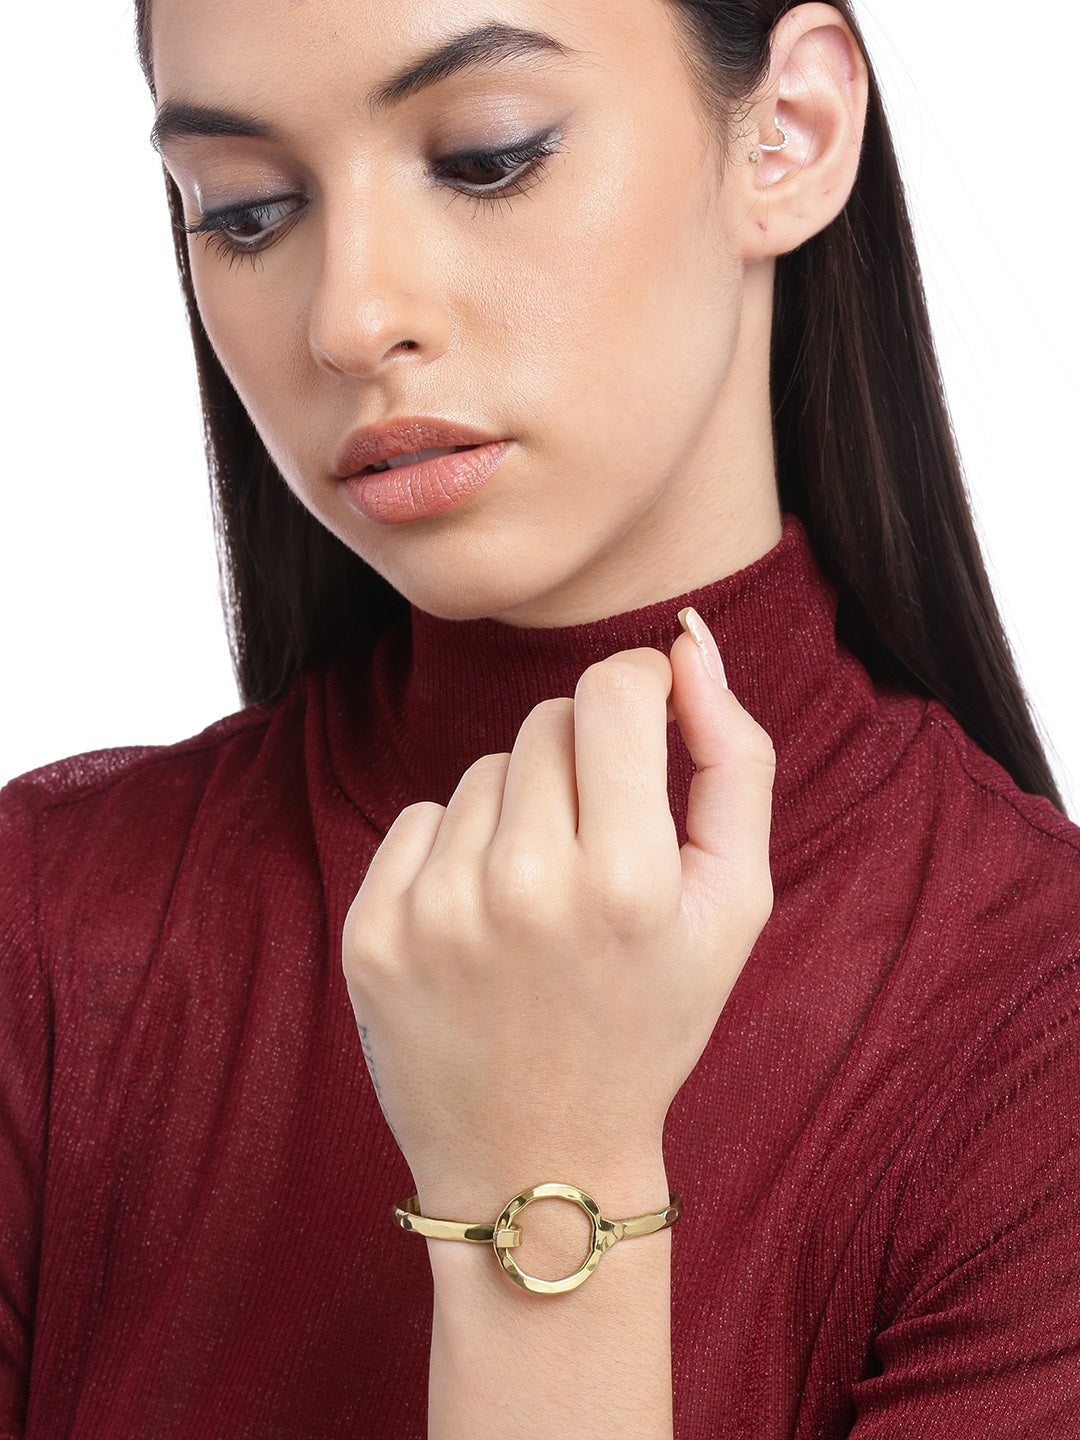 Women Gold-Toned Gold-Plated Bangle-Style Bracelet